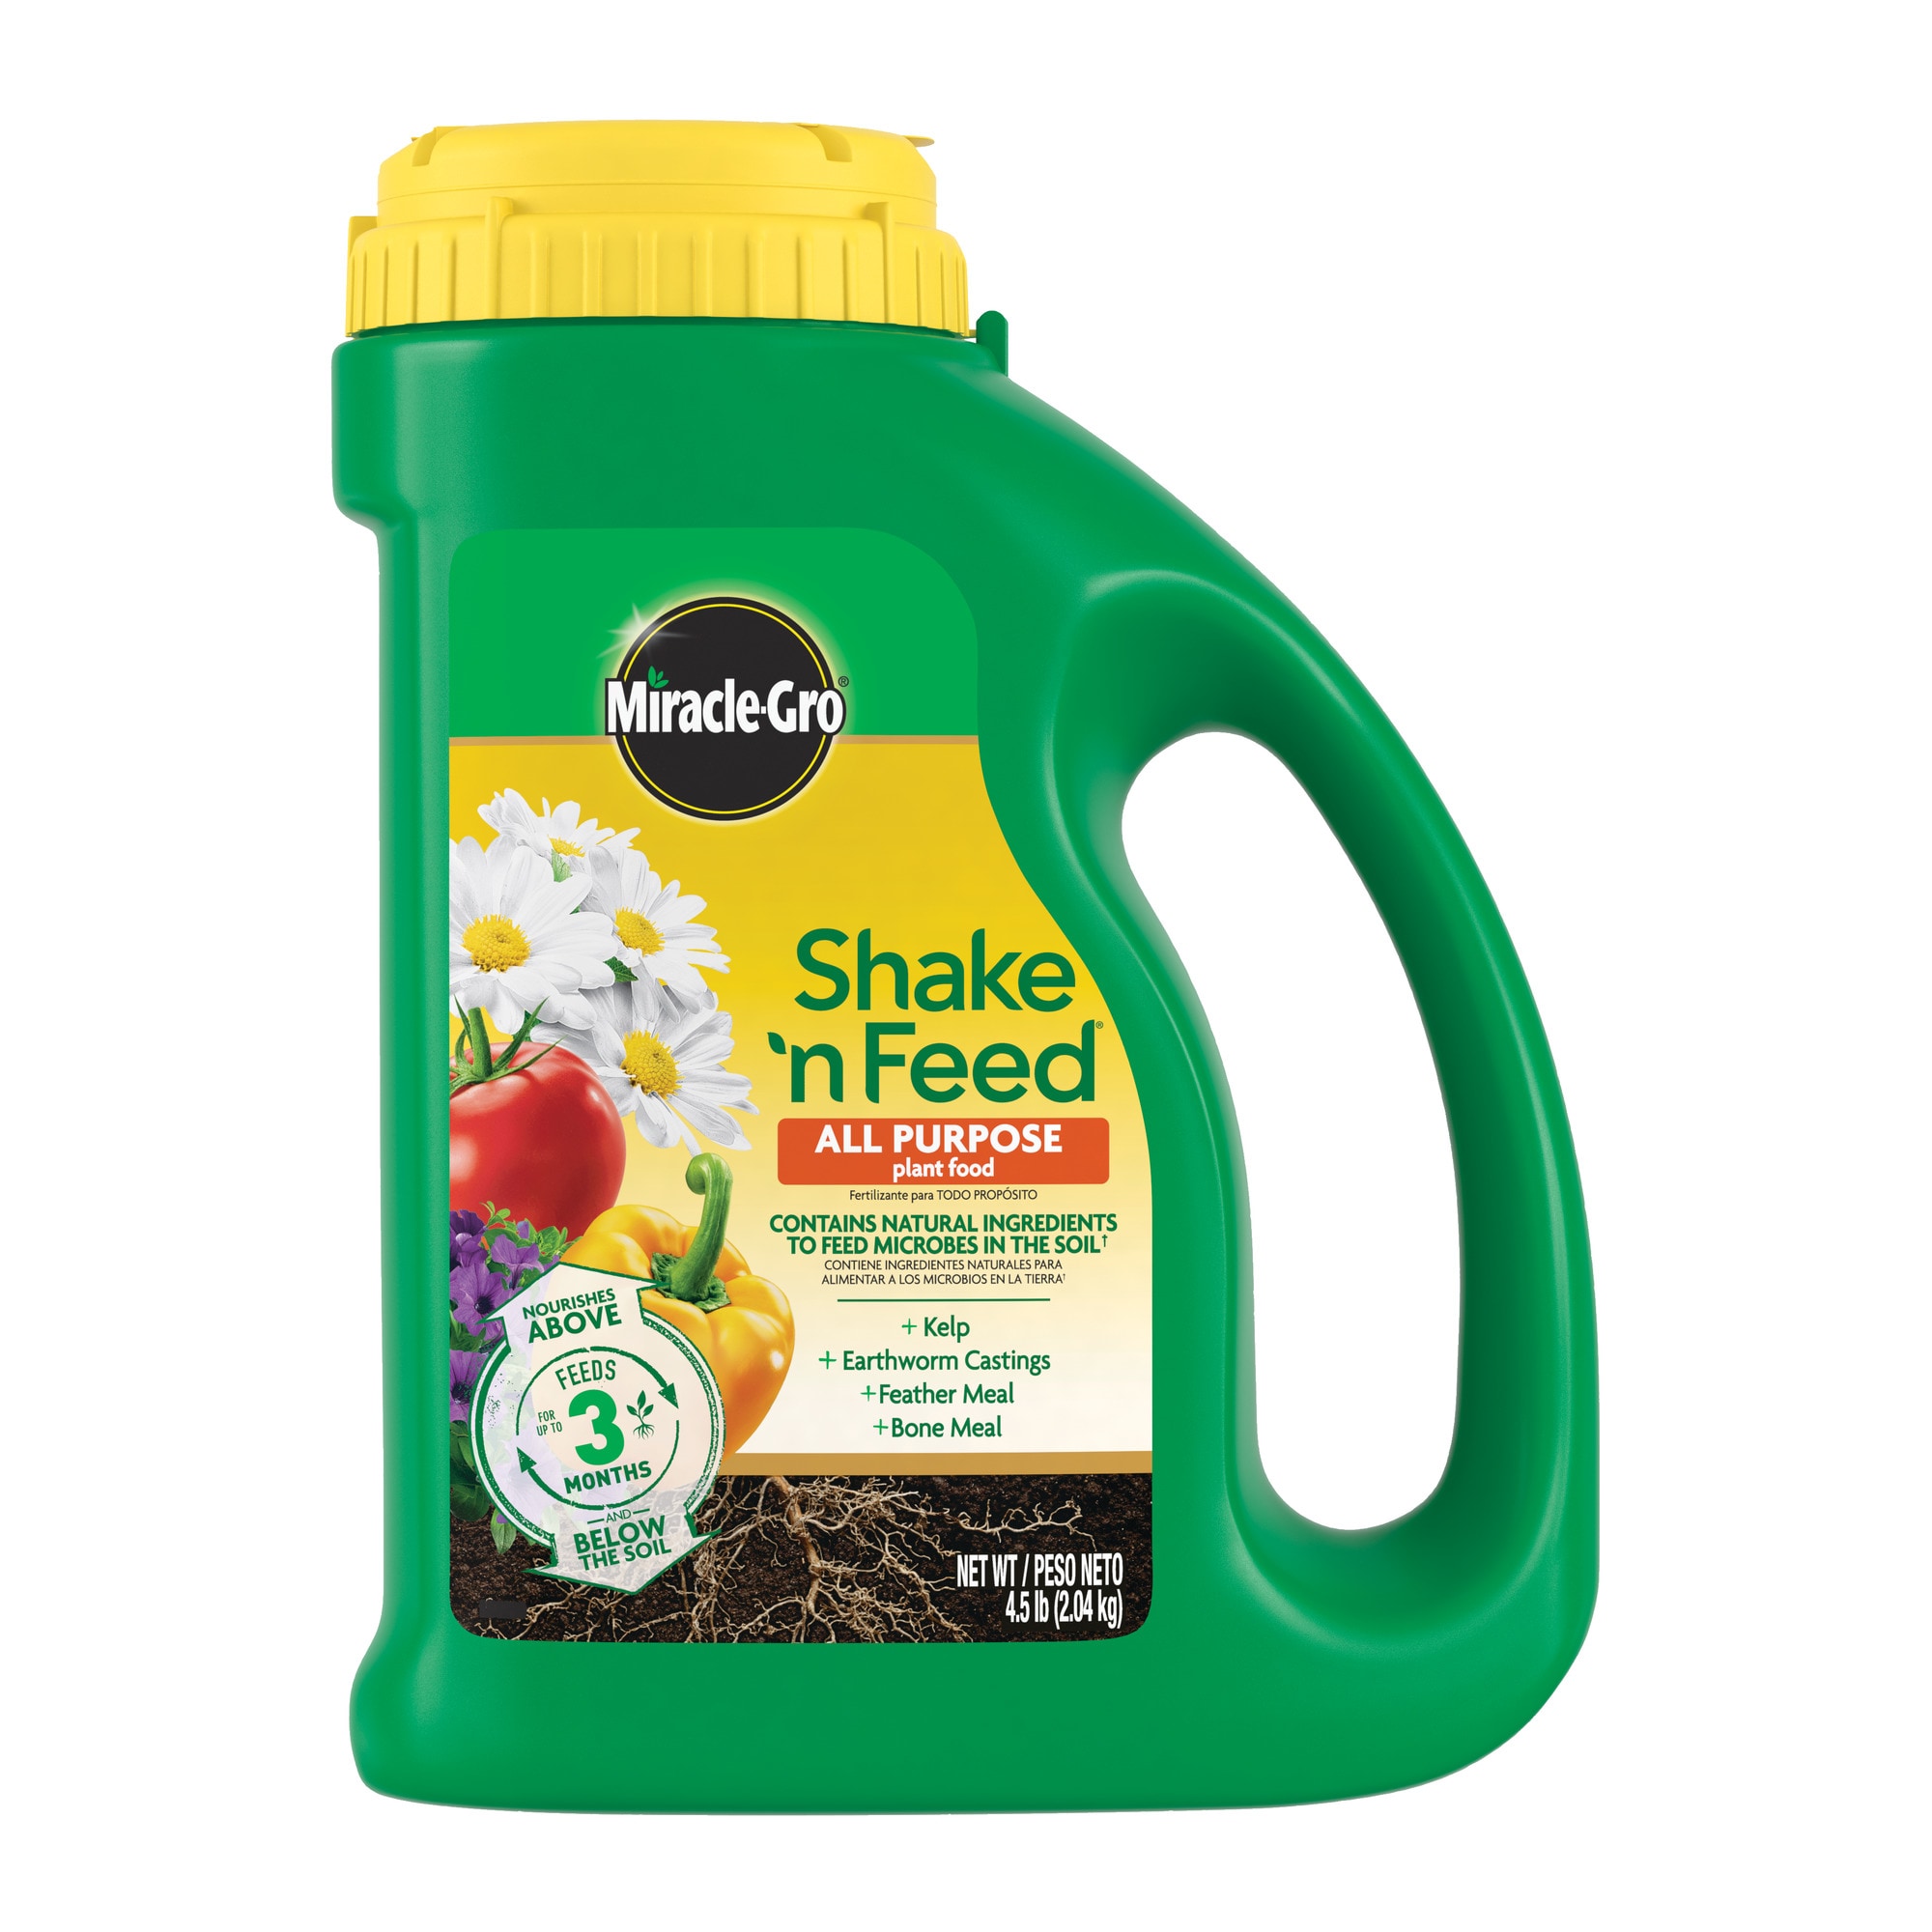 MiracleGro Shake 'n Feed 4.5lb Allpurpose Food in the Plant Food